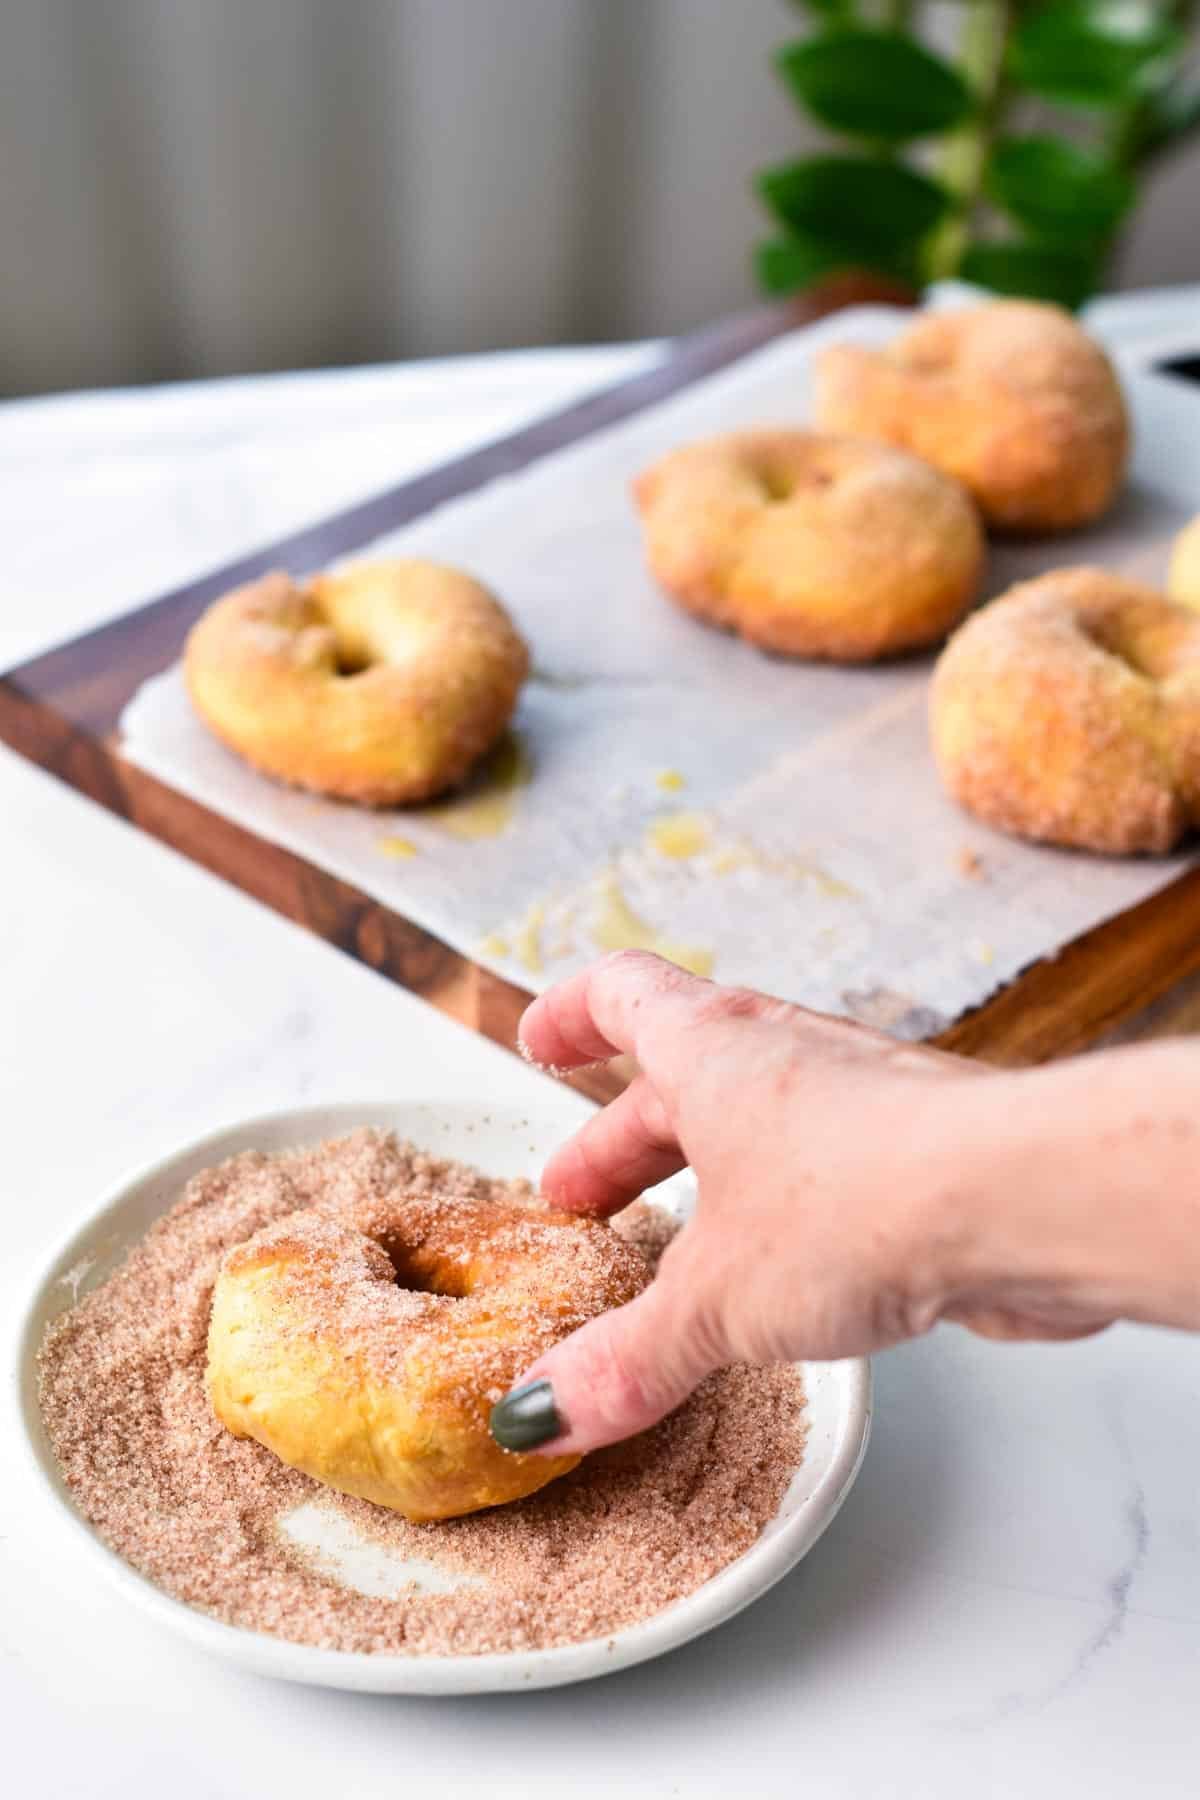 a hand rolling an air fried donuts into cinnamon sugar